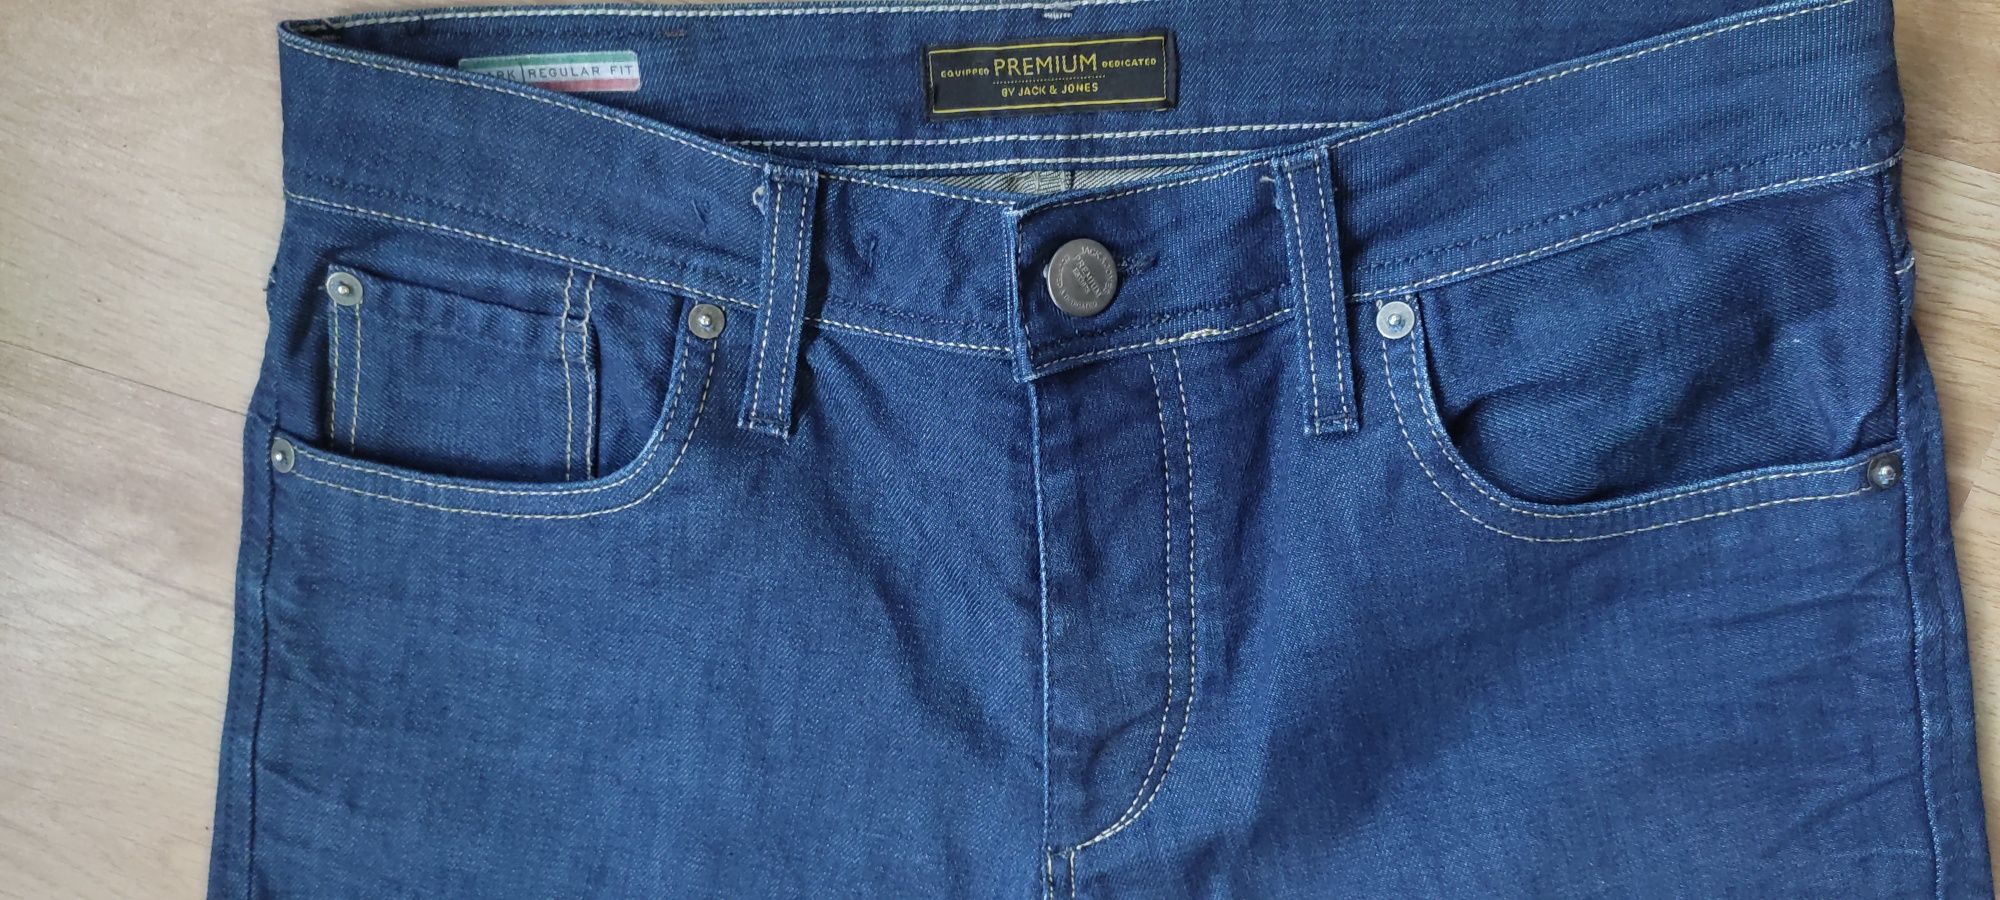 Jack &Jones premium jeansy męskie nowe  31/30